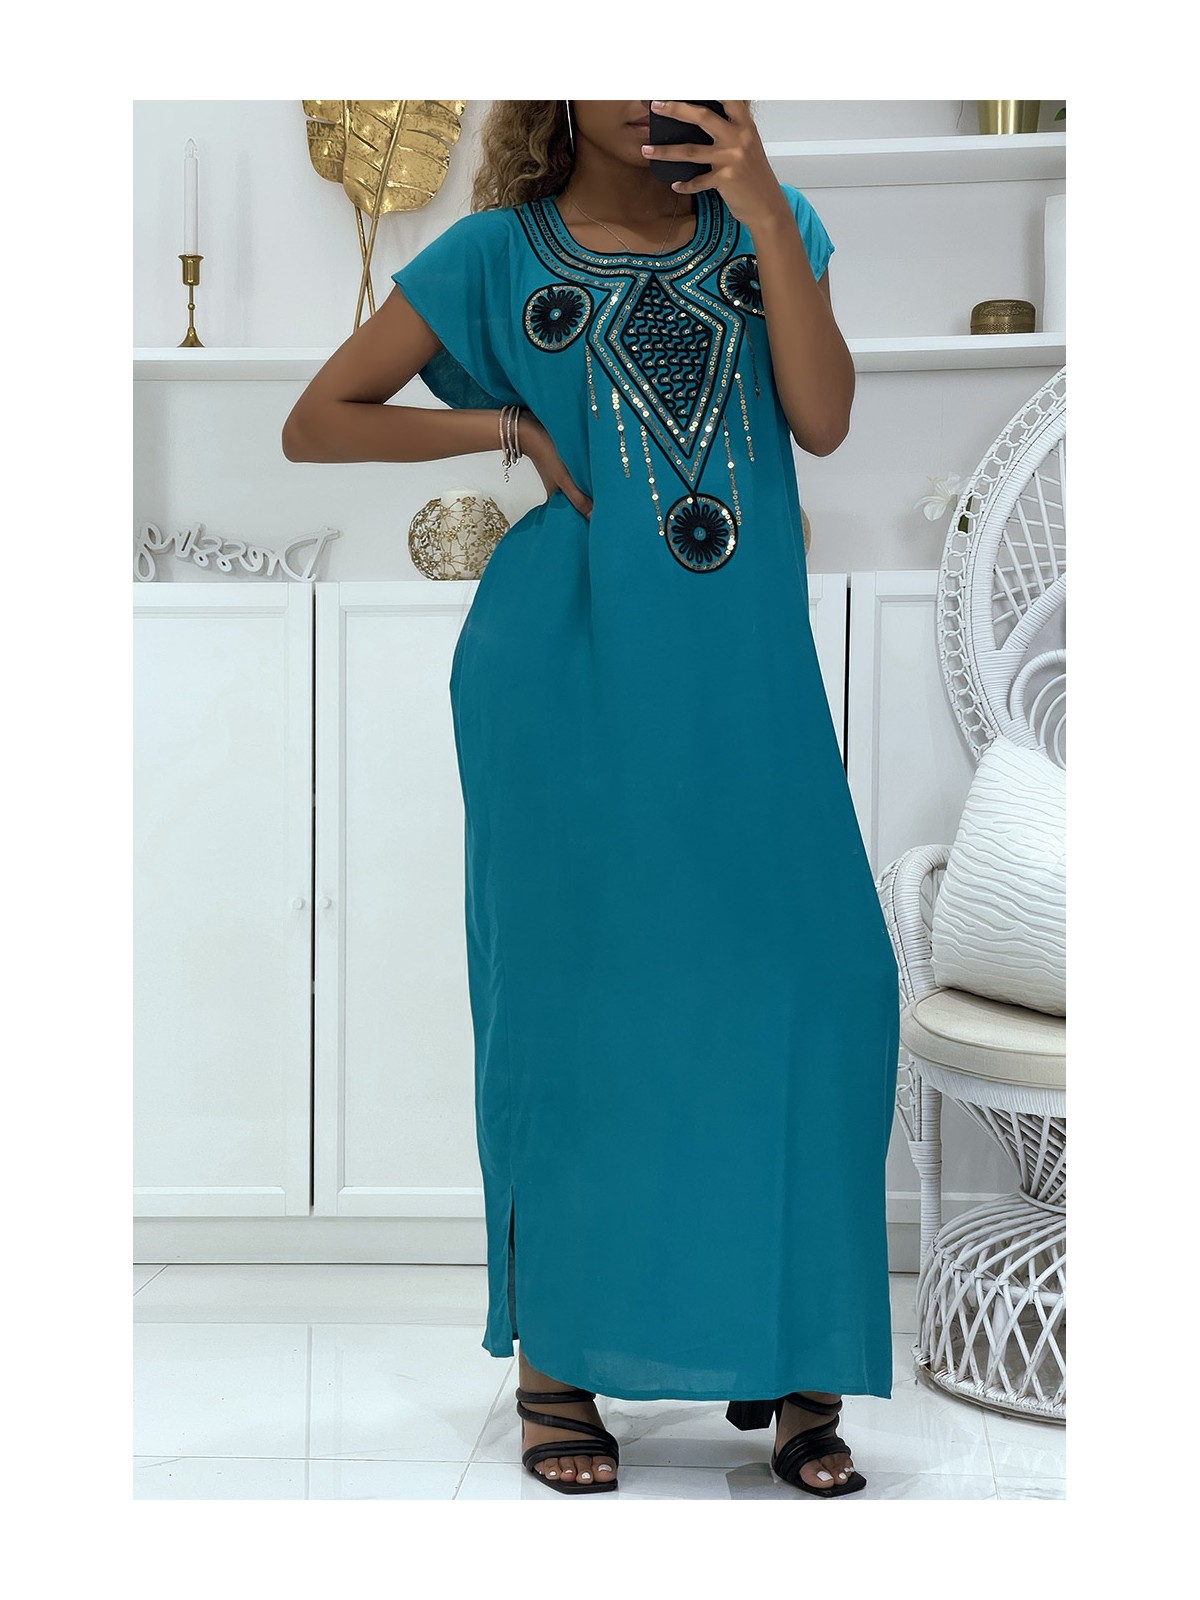 Robe djellaba bleu très agréable à porter avec joli motif brodé au col ornée de strass - 2